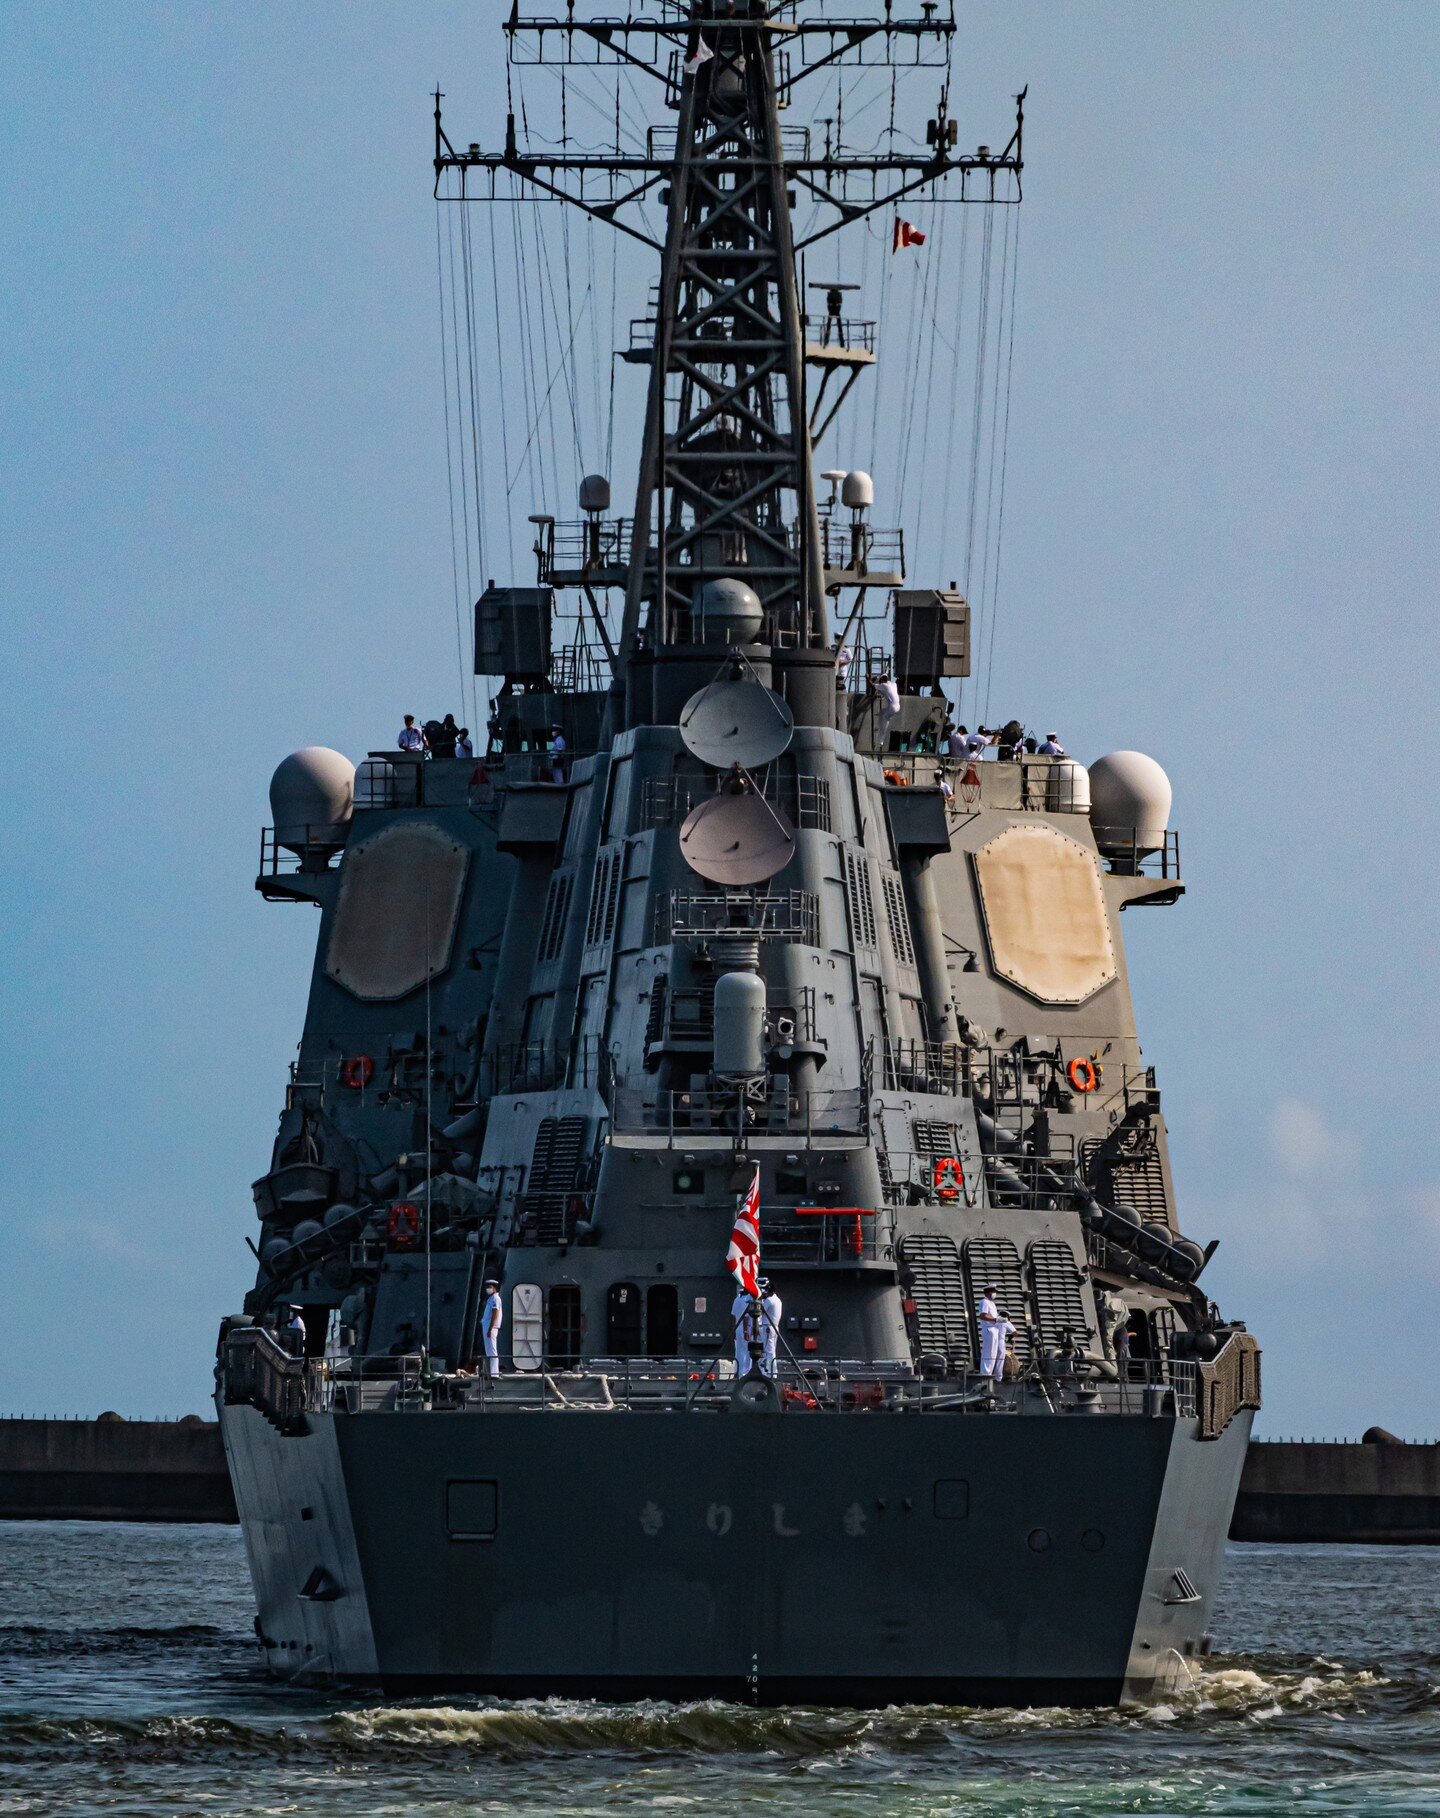 Last #photo of the #jmsdf #japanmaritimeselfdefenseforce #destroyer #kirishima

The #ship left port and was heading back home.

#海上自衛隊 #護衛艦 #きりしま #護衛艦きりしま #japan #日本